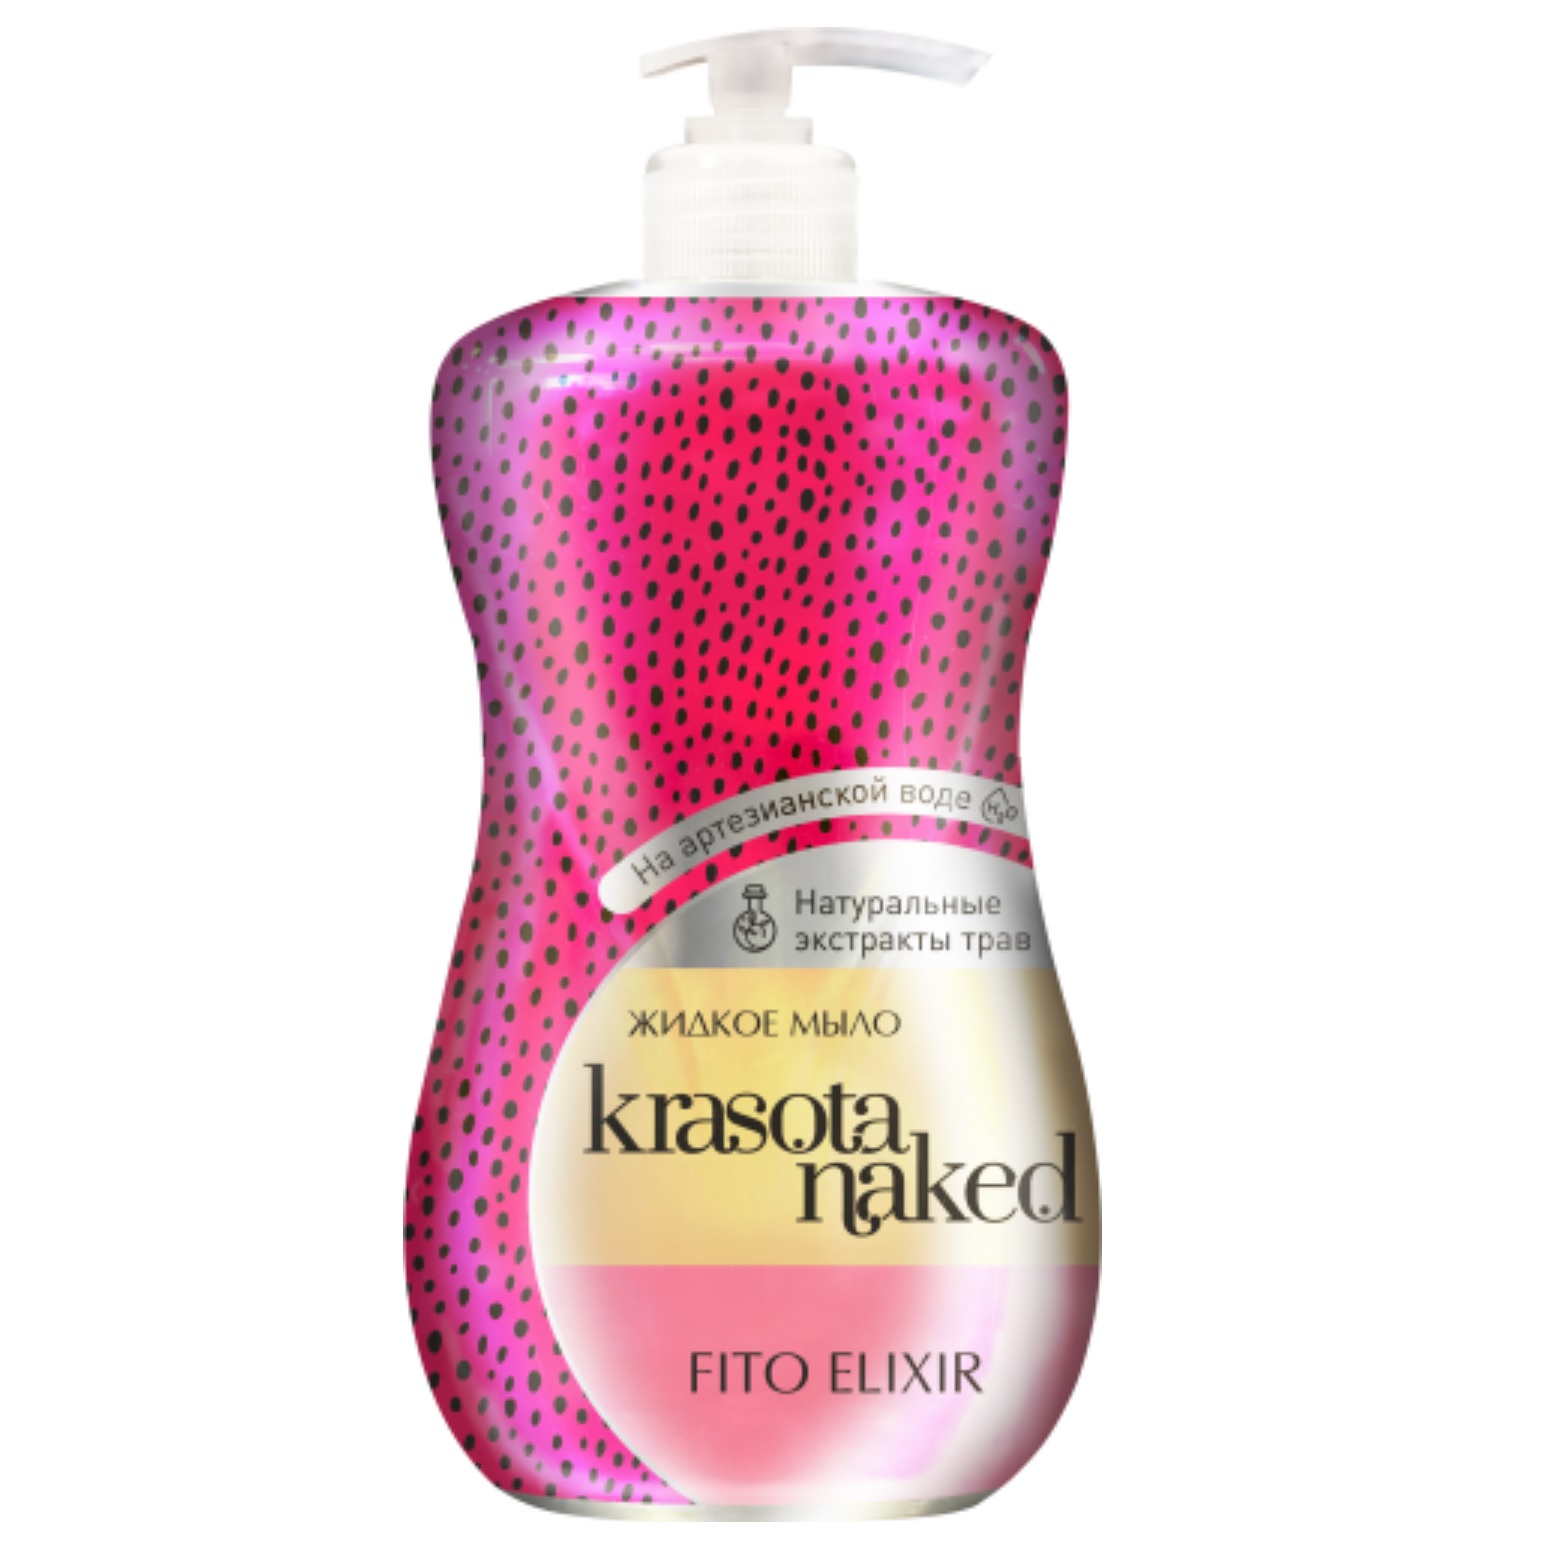 KRASOTA Naked мыло-жидкое 500 Fito Elixir красота краса